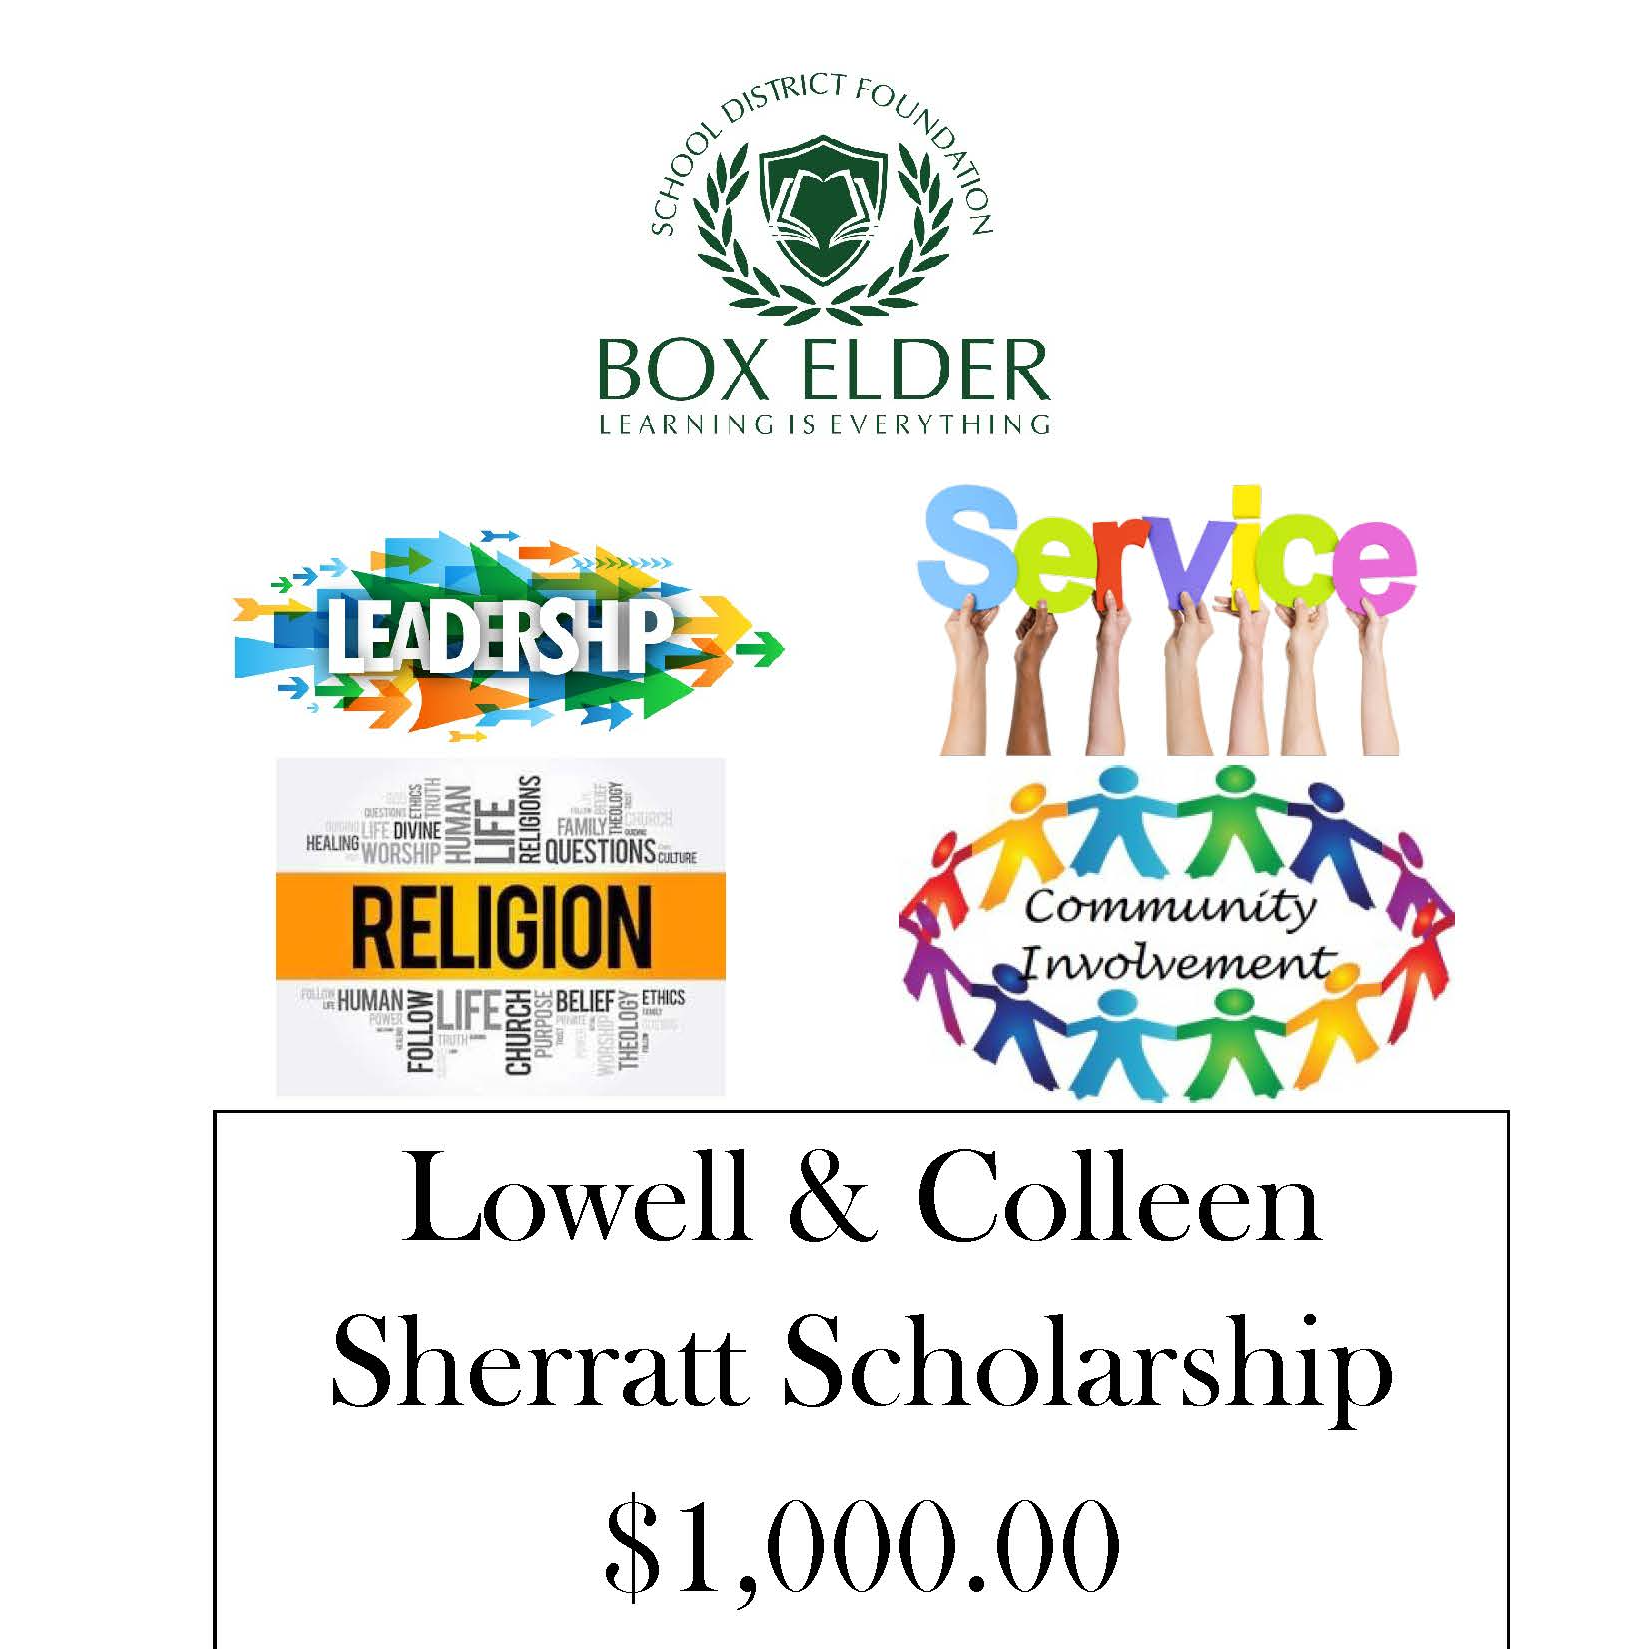 Lowell & Colleen Sherratt Scholarship